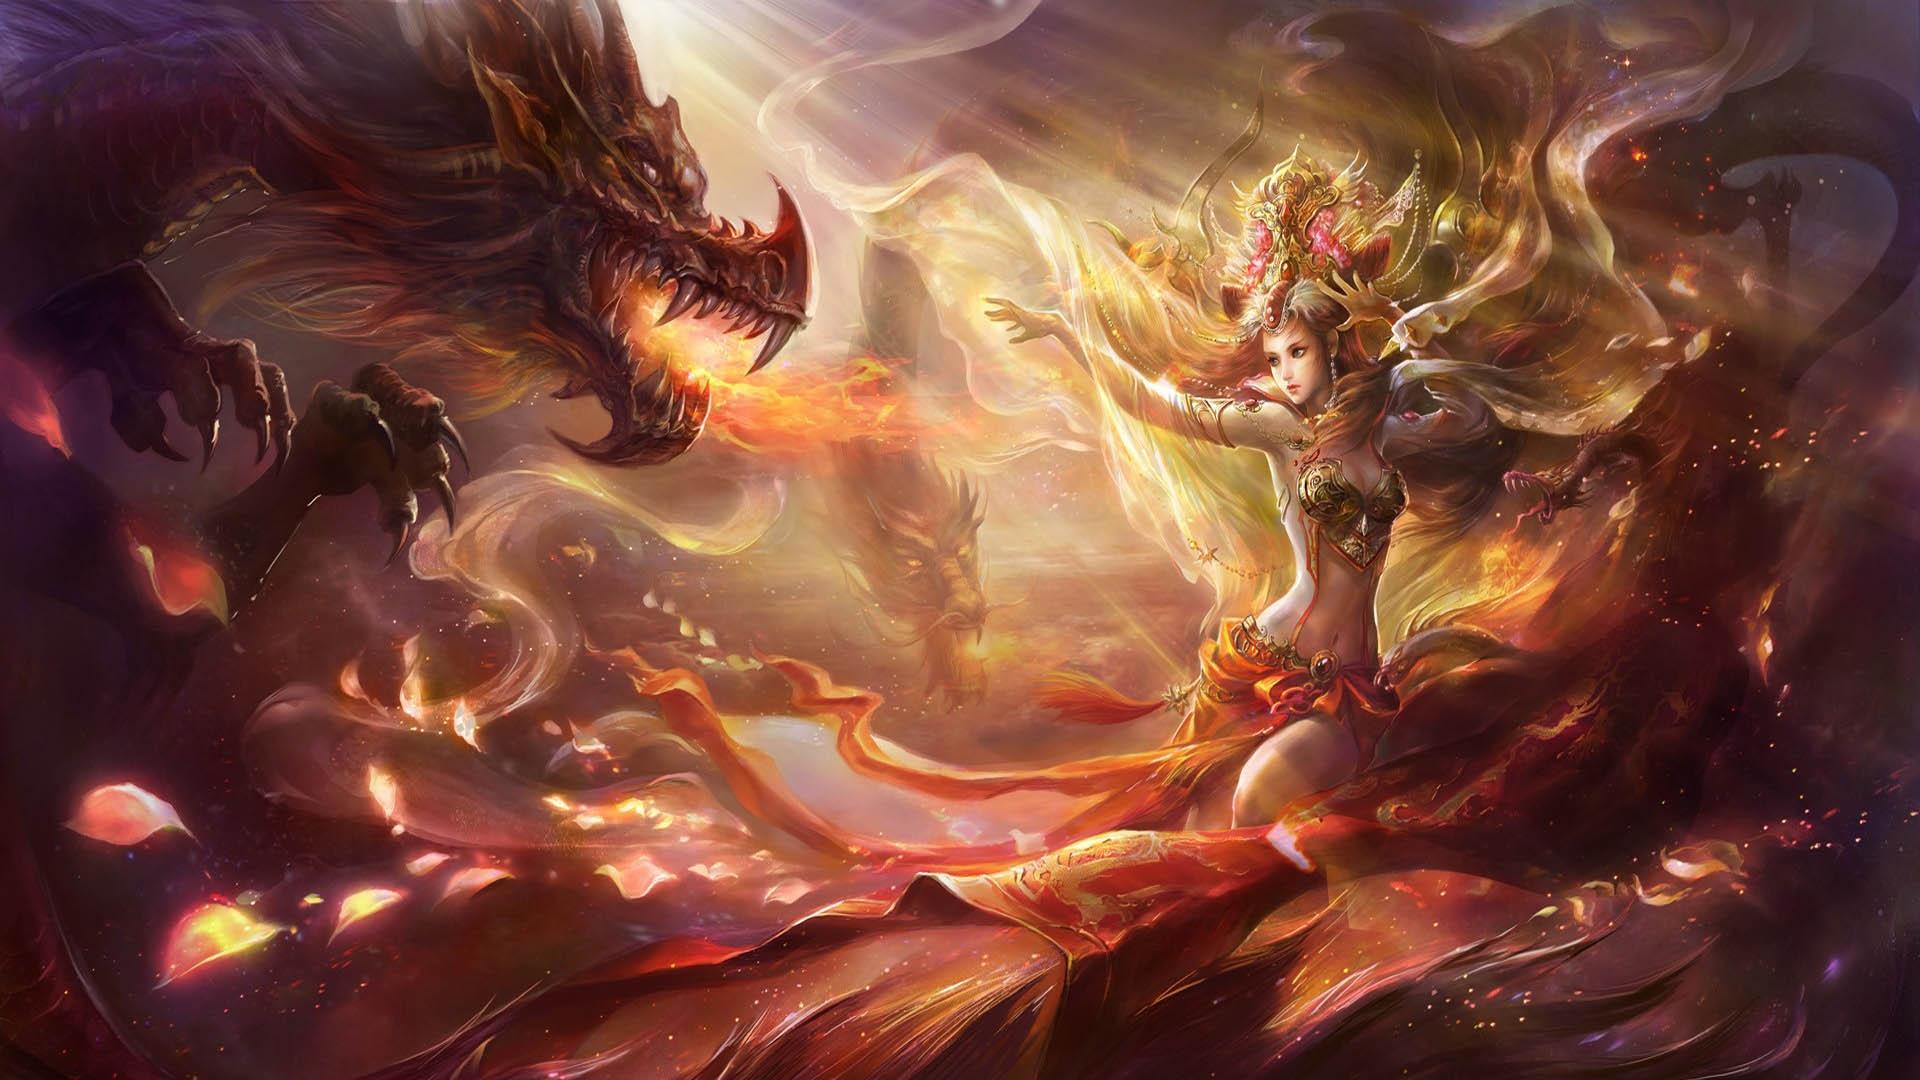 Enchanted Dragon HD Wallpaper, get it now